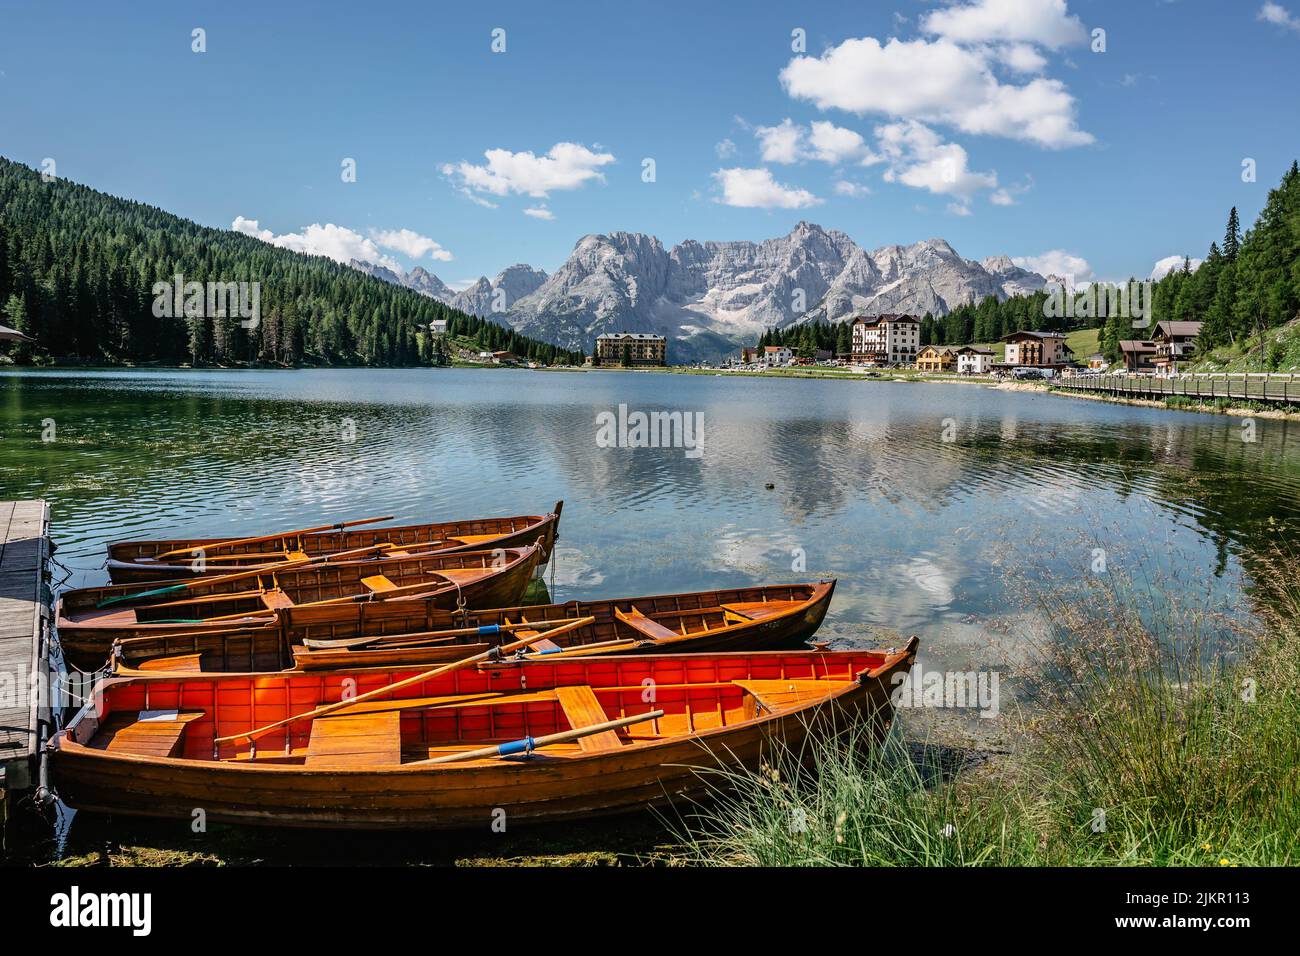 Lake Misurina,Lago di Misurina is pearl of the Dolomites.Mountain lake in Italy with wooden boats,Veneto region,Sorapis mountain group.Perfect Stock Photo